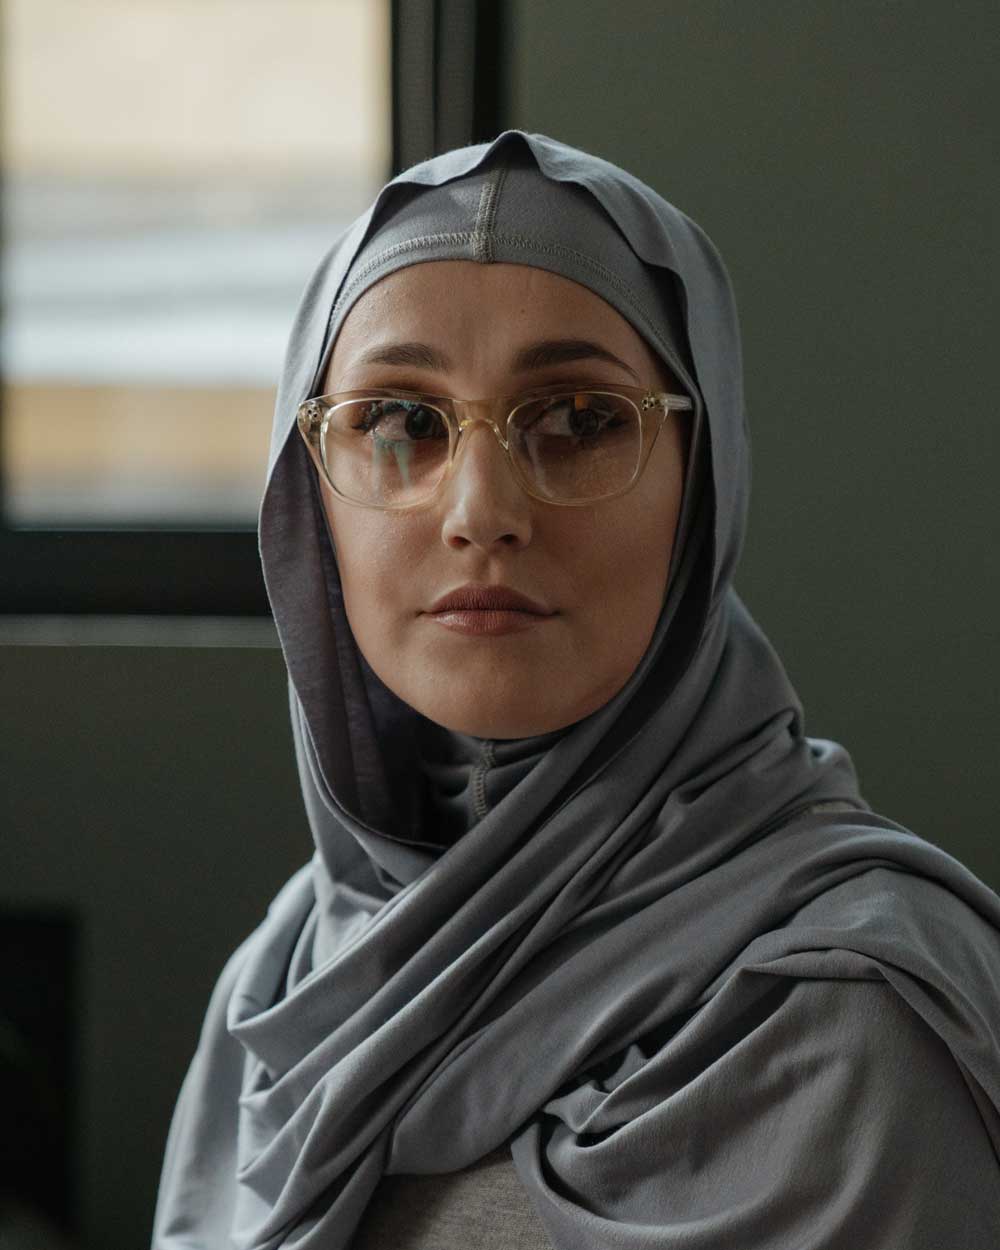 Lady wearing hijab and nude crystal eyeglasses frame